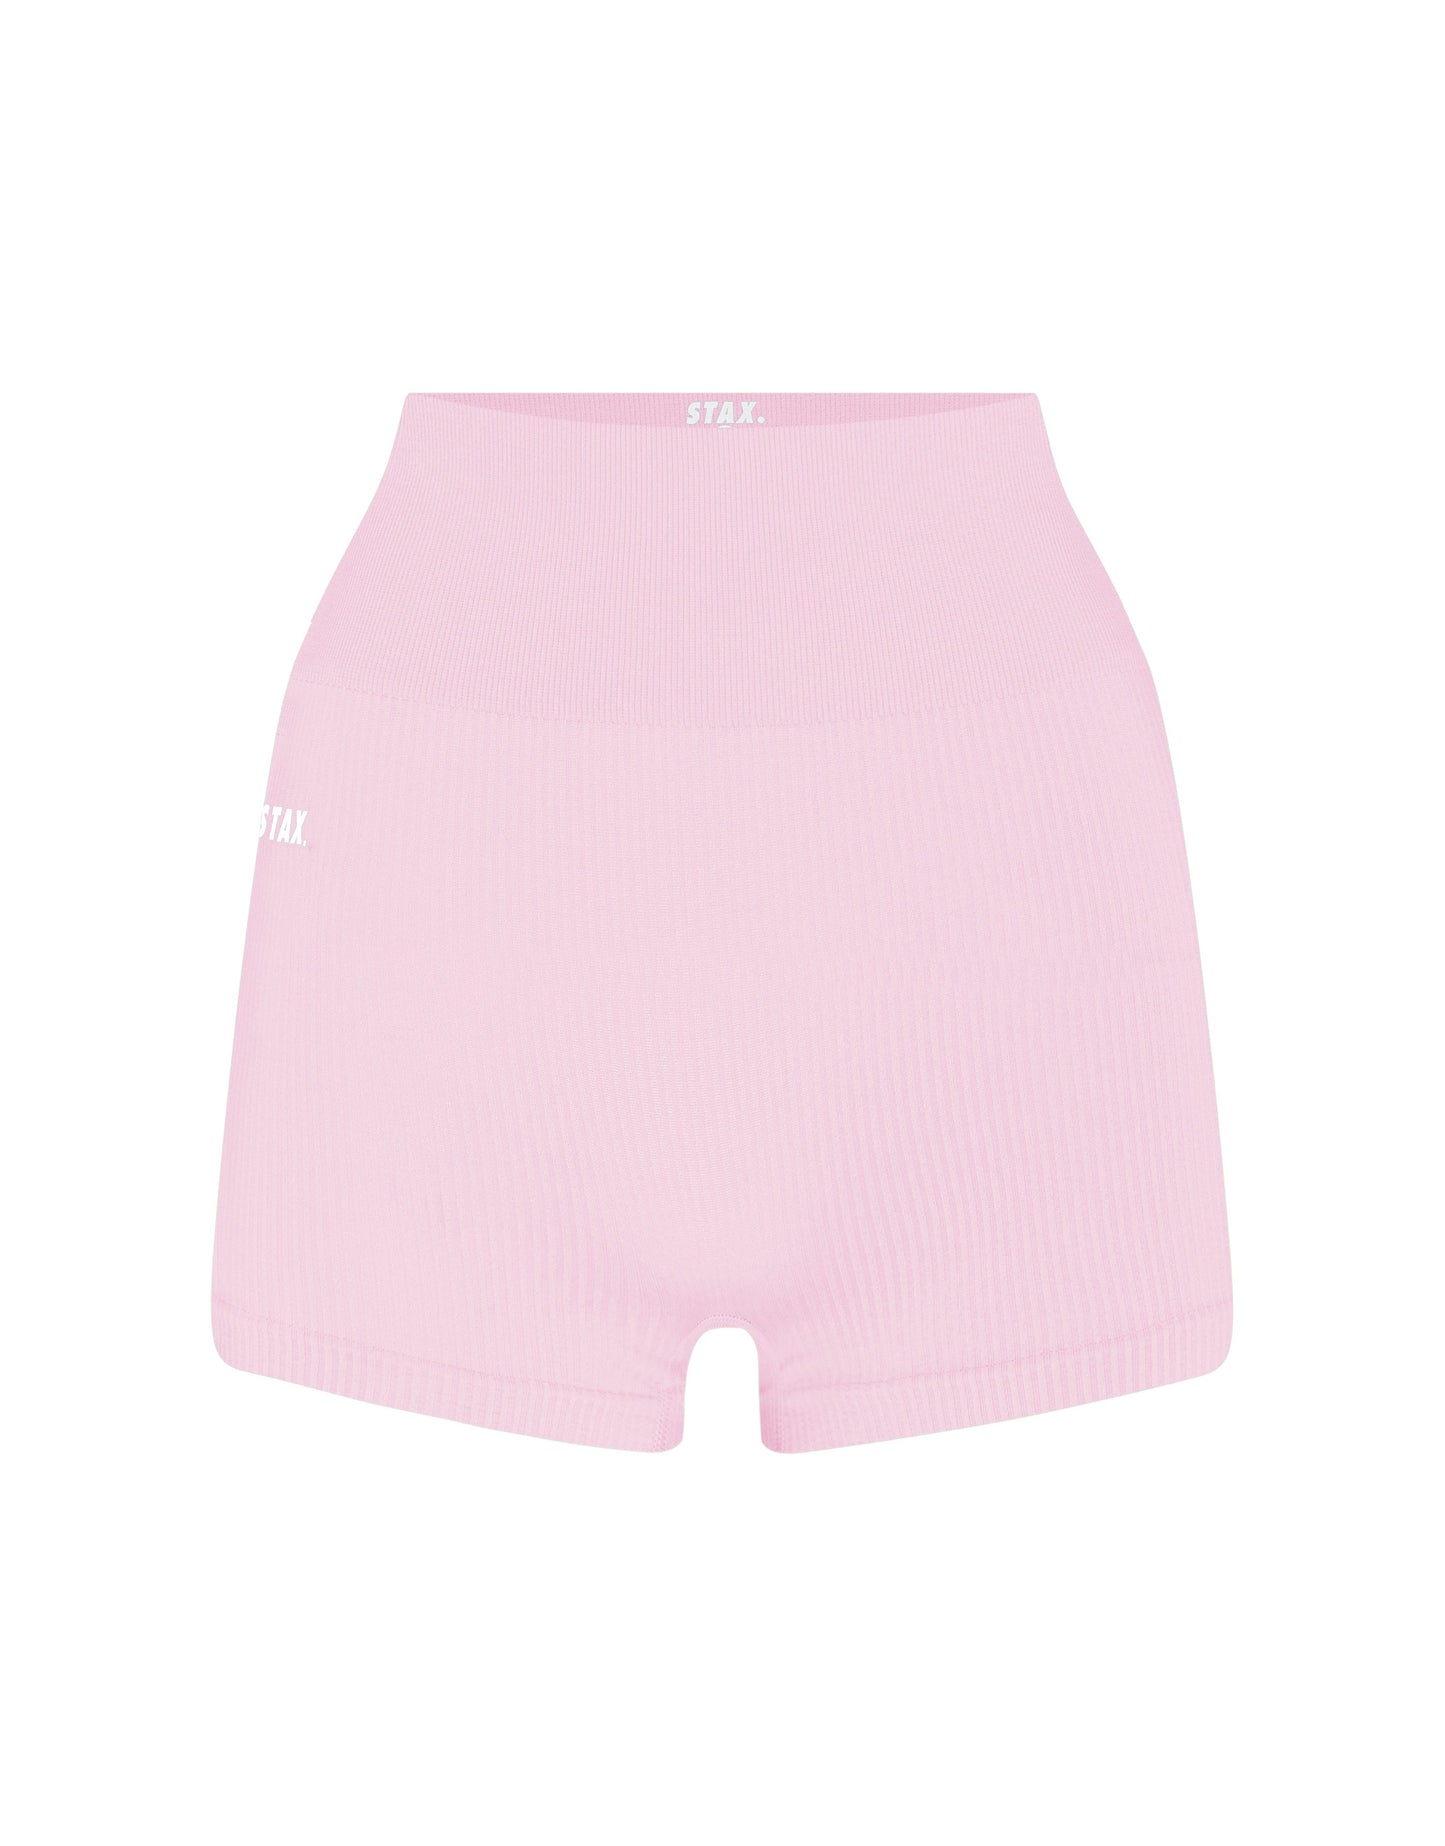 STAX. Premium Seamless V5.1 (Favourites) Mini Lounge Shorts - Taffy (Pink)